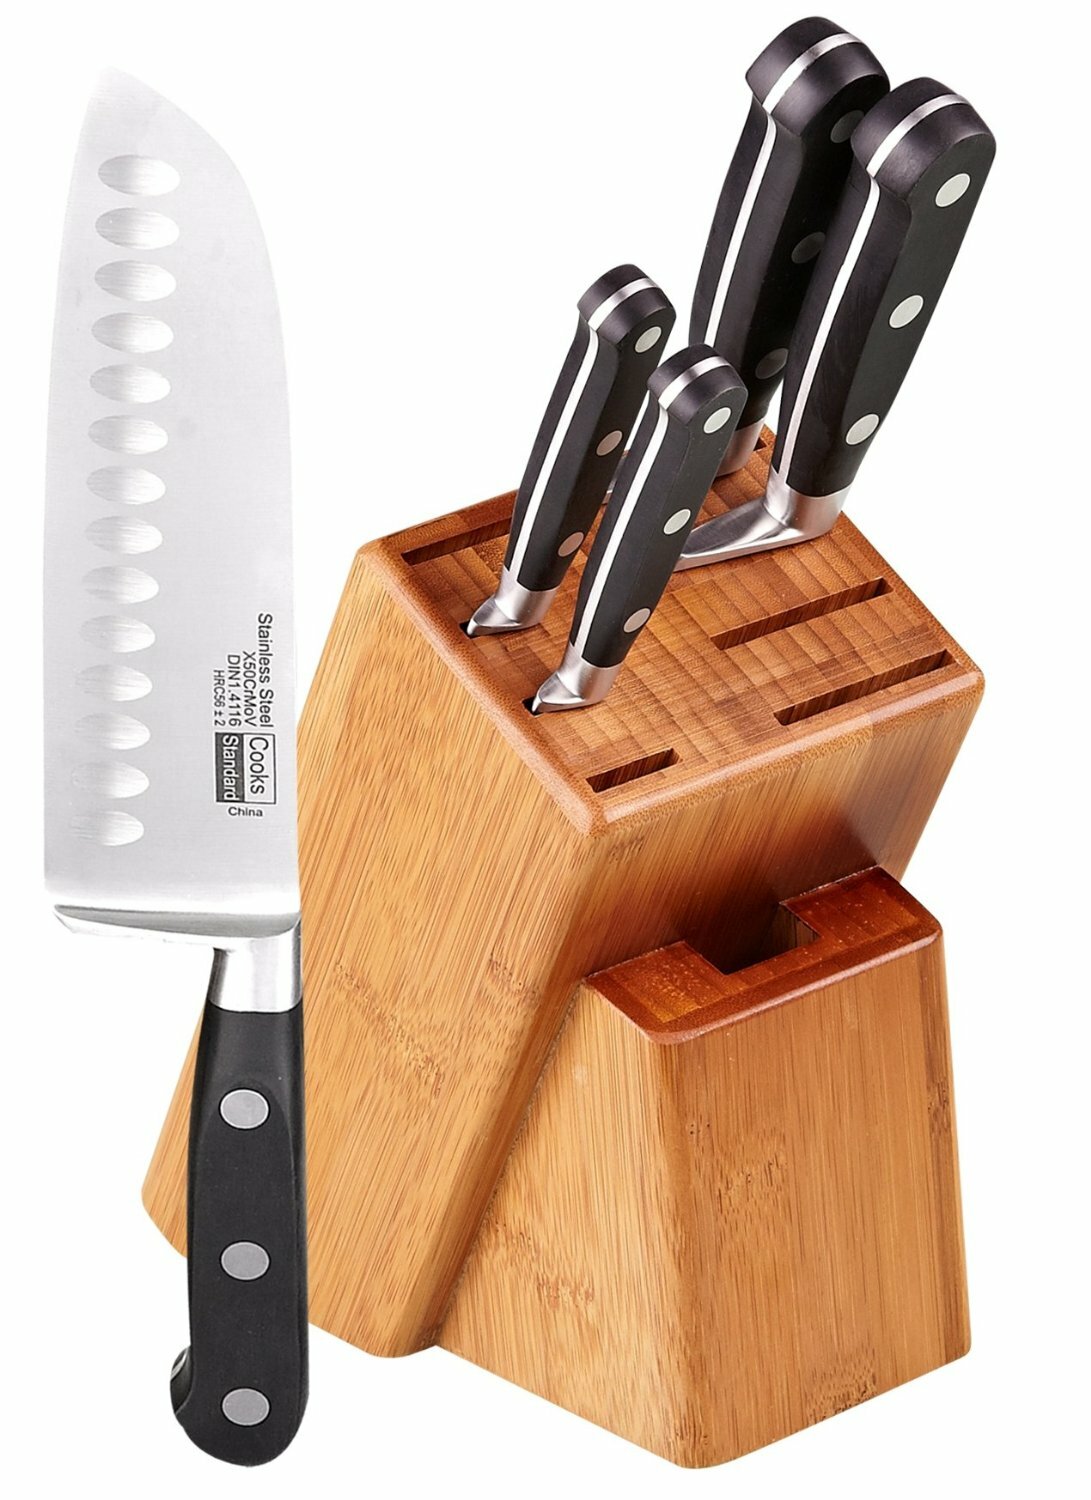 22-Piece Premier Forged Knife Block Set